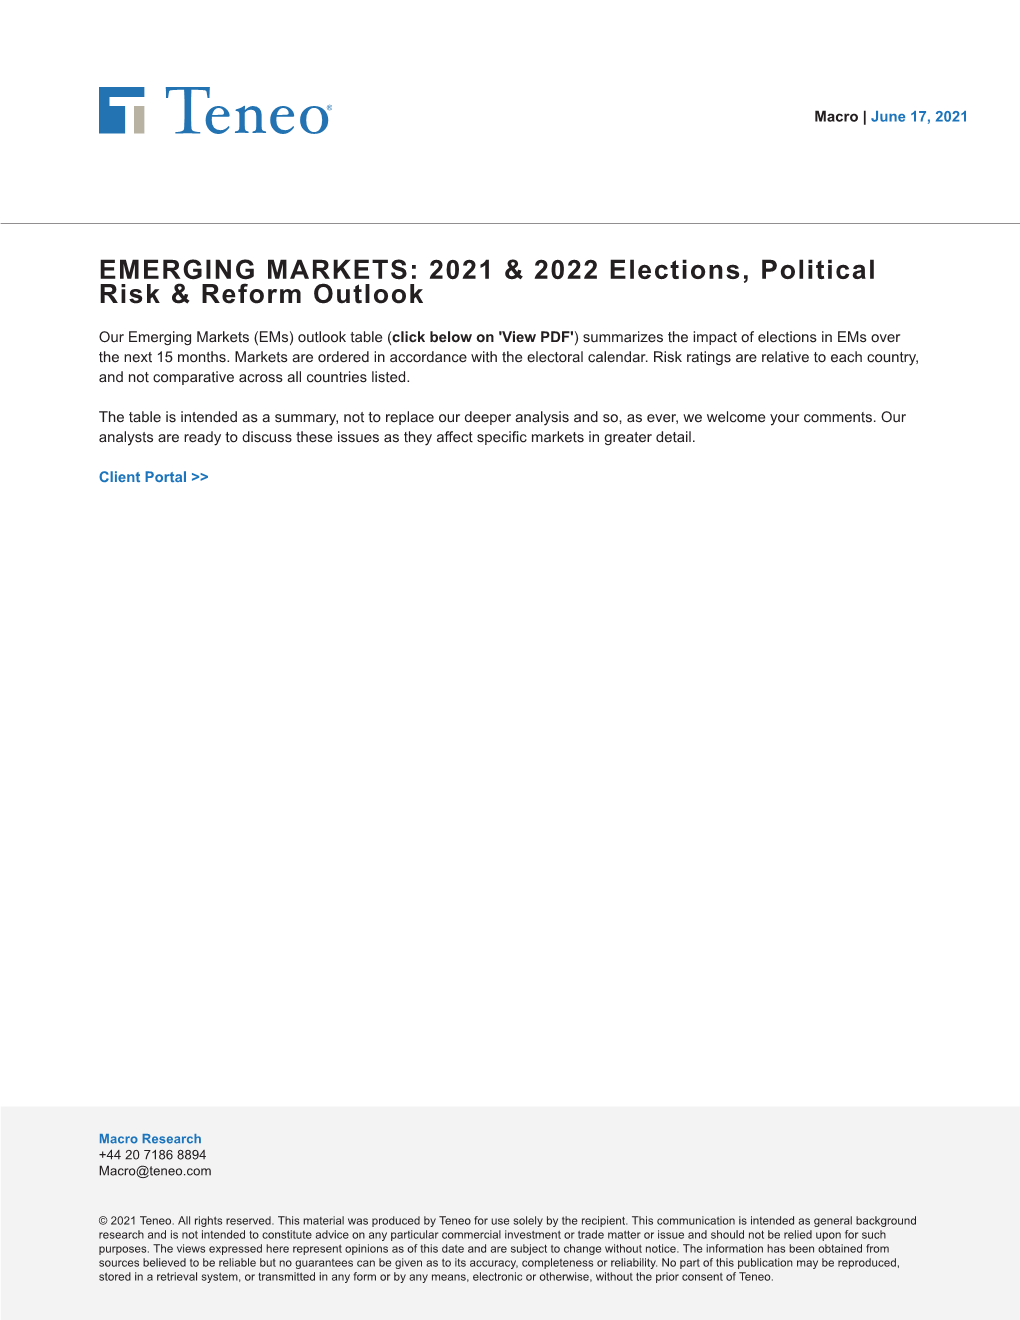 Emerging Markets – 2021 & 2022 Elections, Political Risk